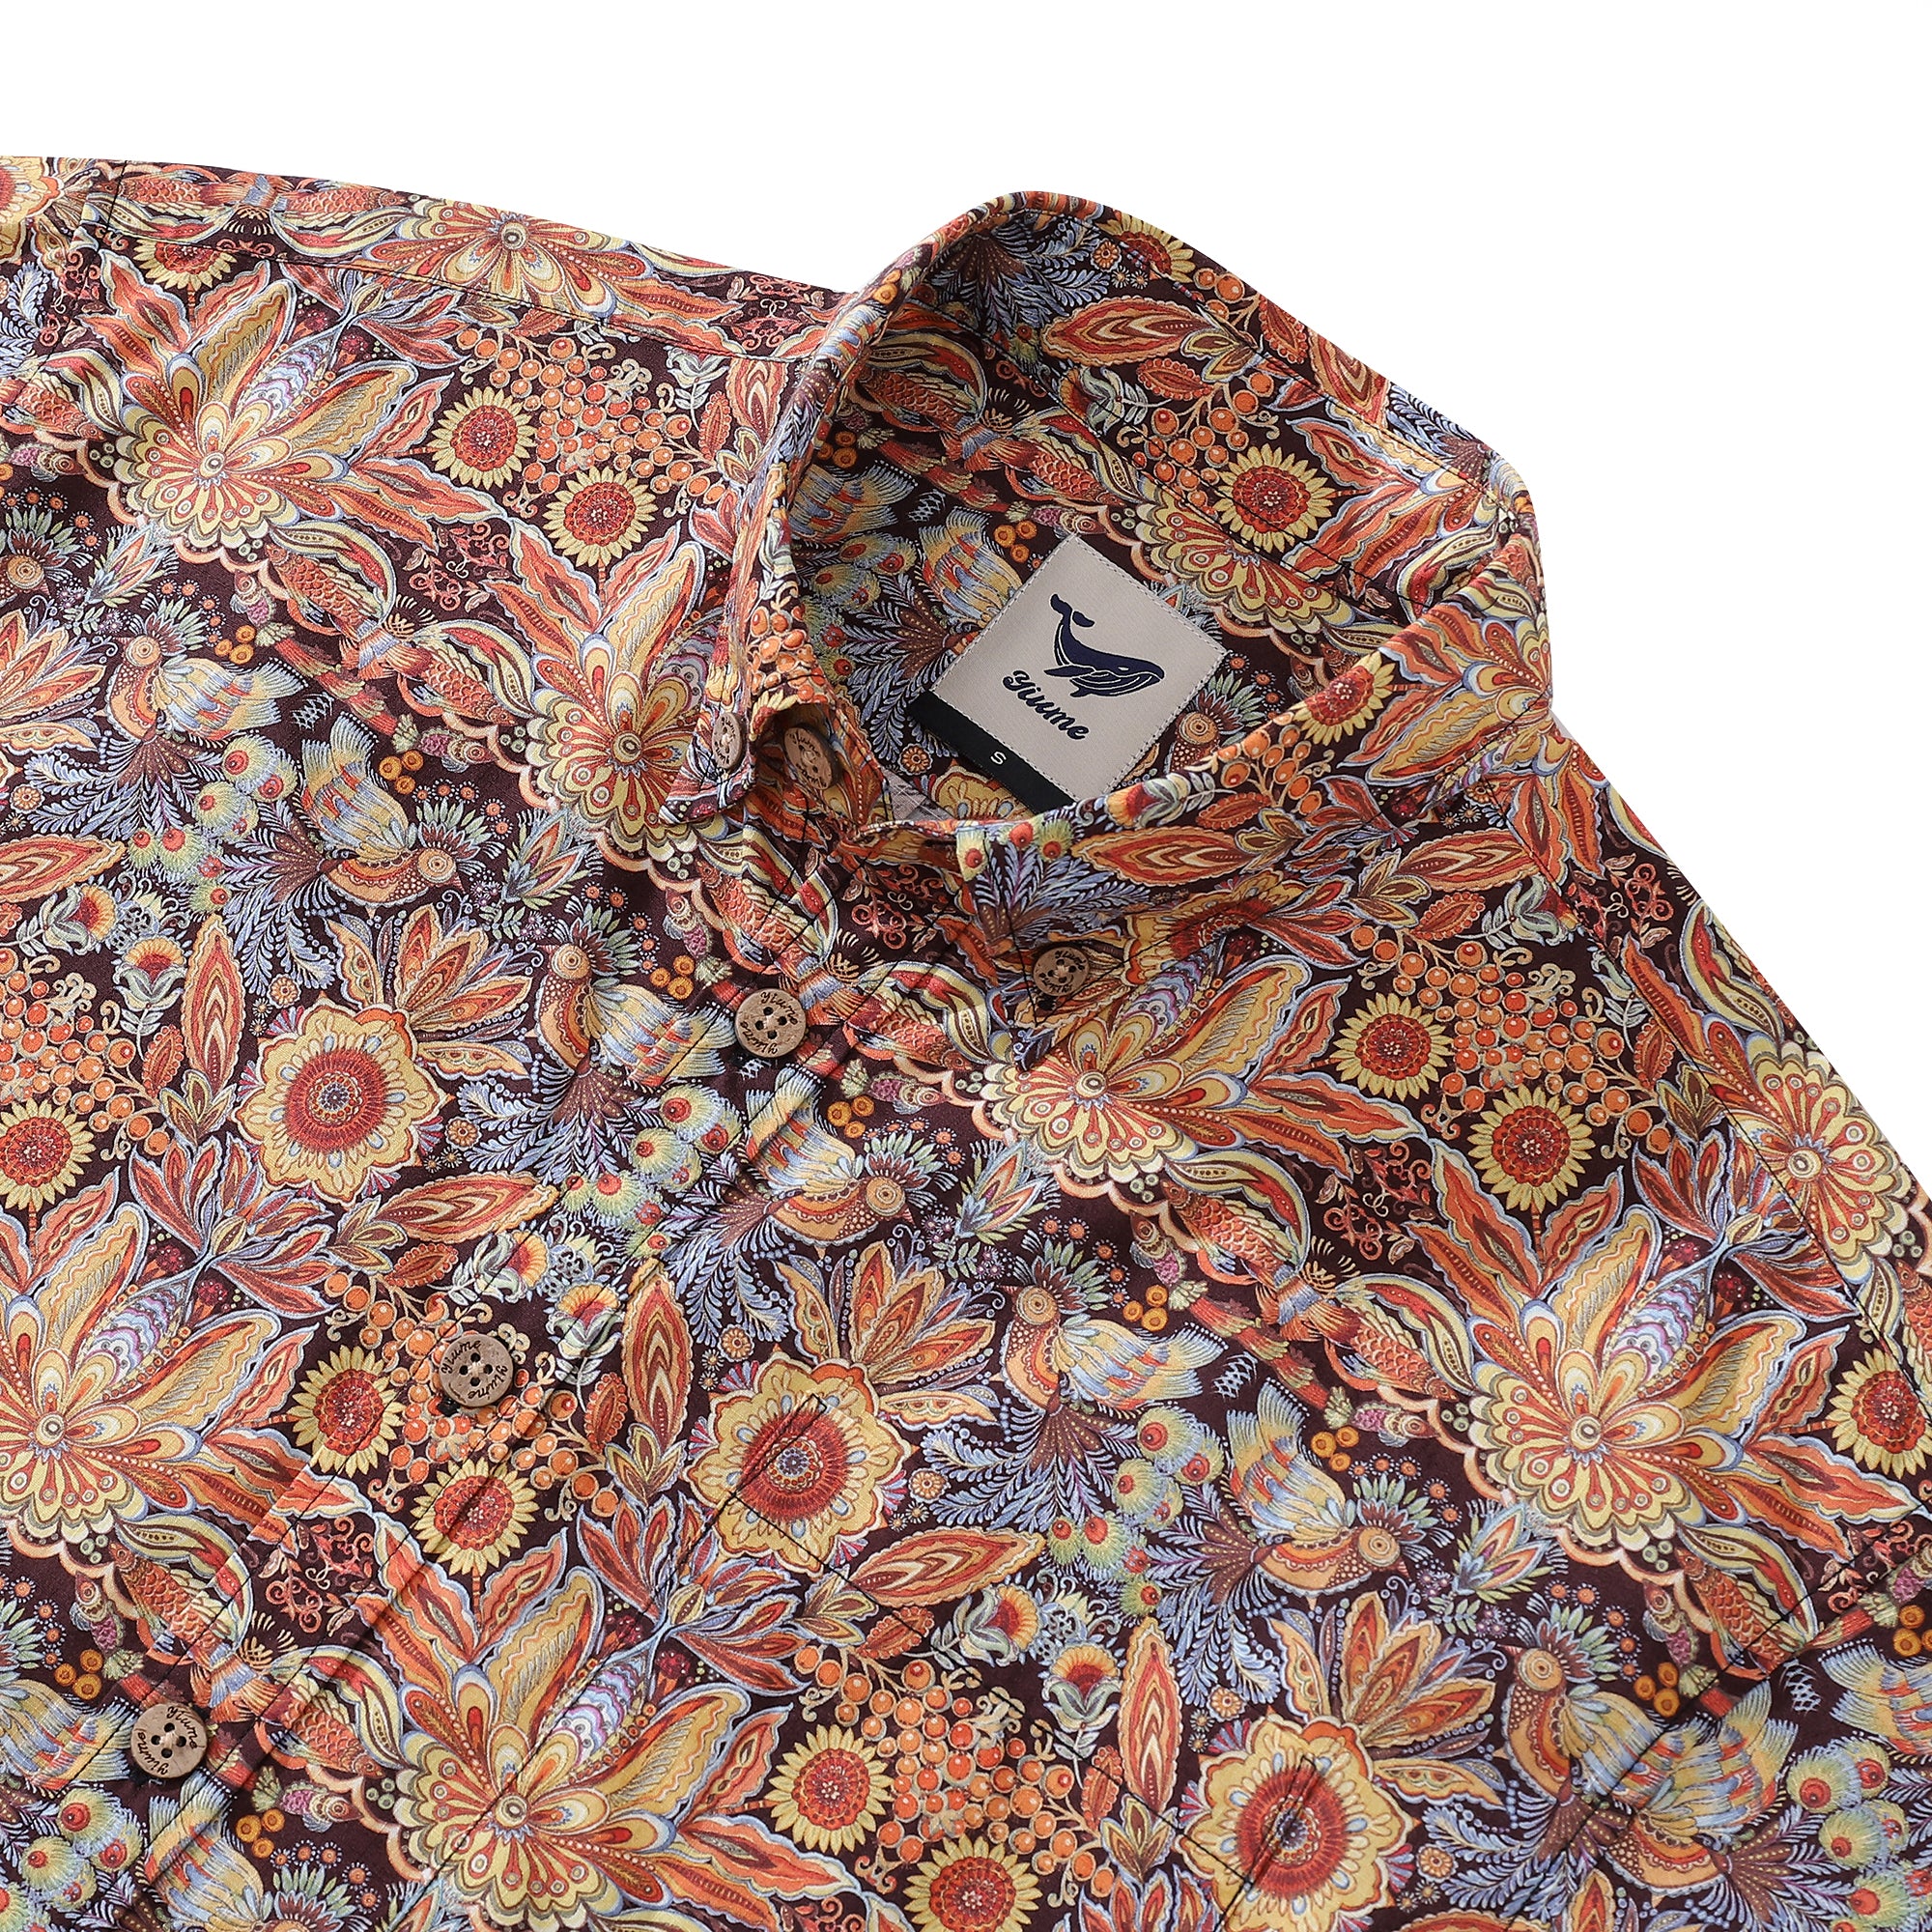 Men's Hawaiian Shirt Mystical Garden Print Cotton 1940s Vintage Short Sleeve Aloha Shirt